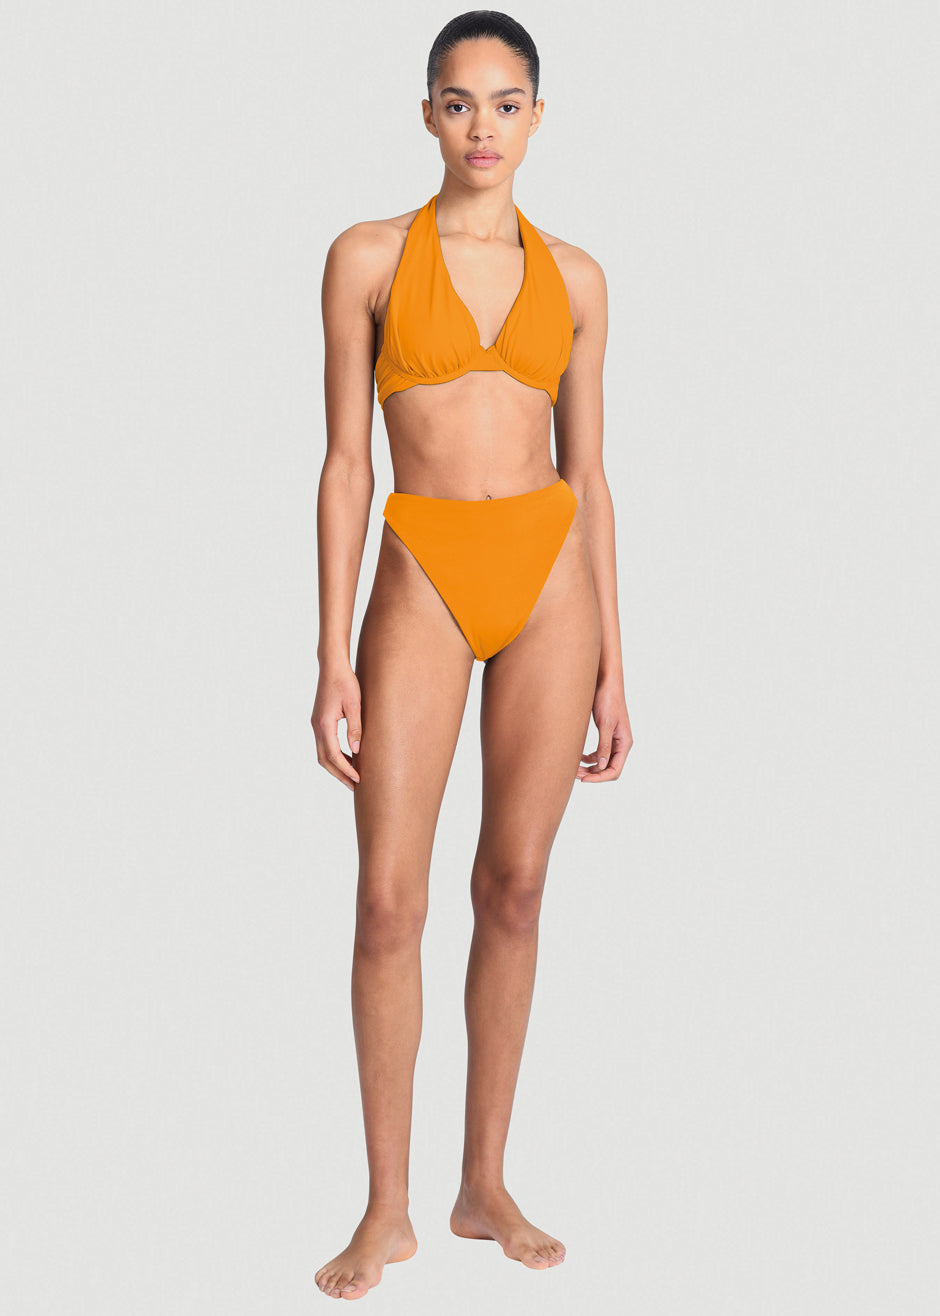 Aexae Triangle High Cut Swimsuit Bottoms - Orange - 2